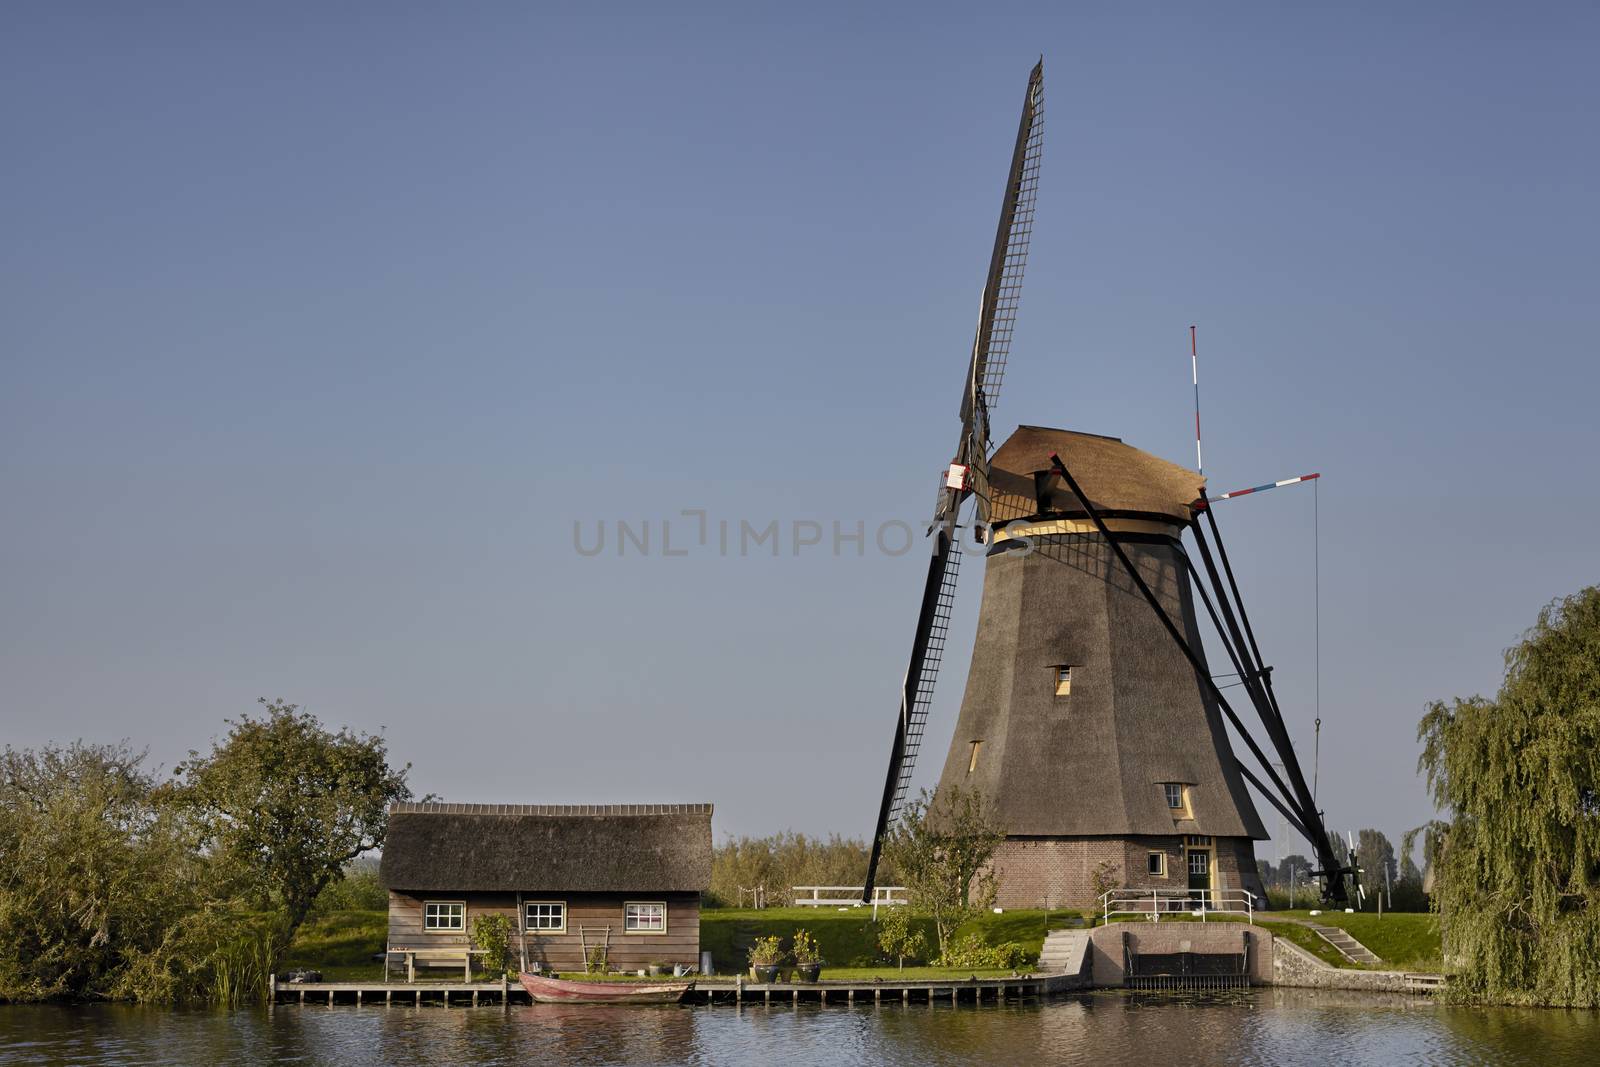 Stone brick Dutch windmill at Kinderdijk, an UNESCO world herita by janssenkruseproductions